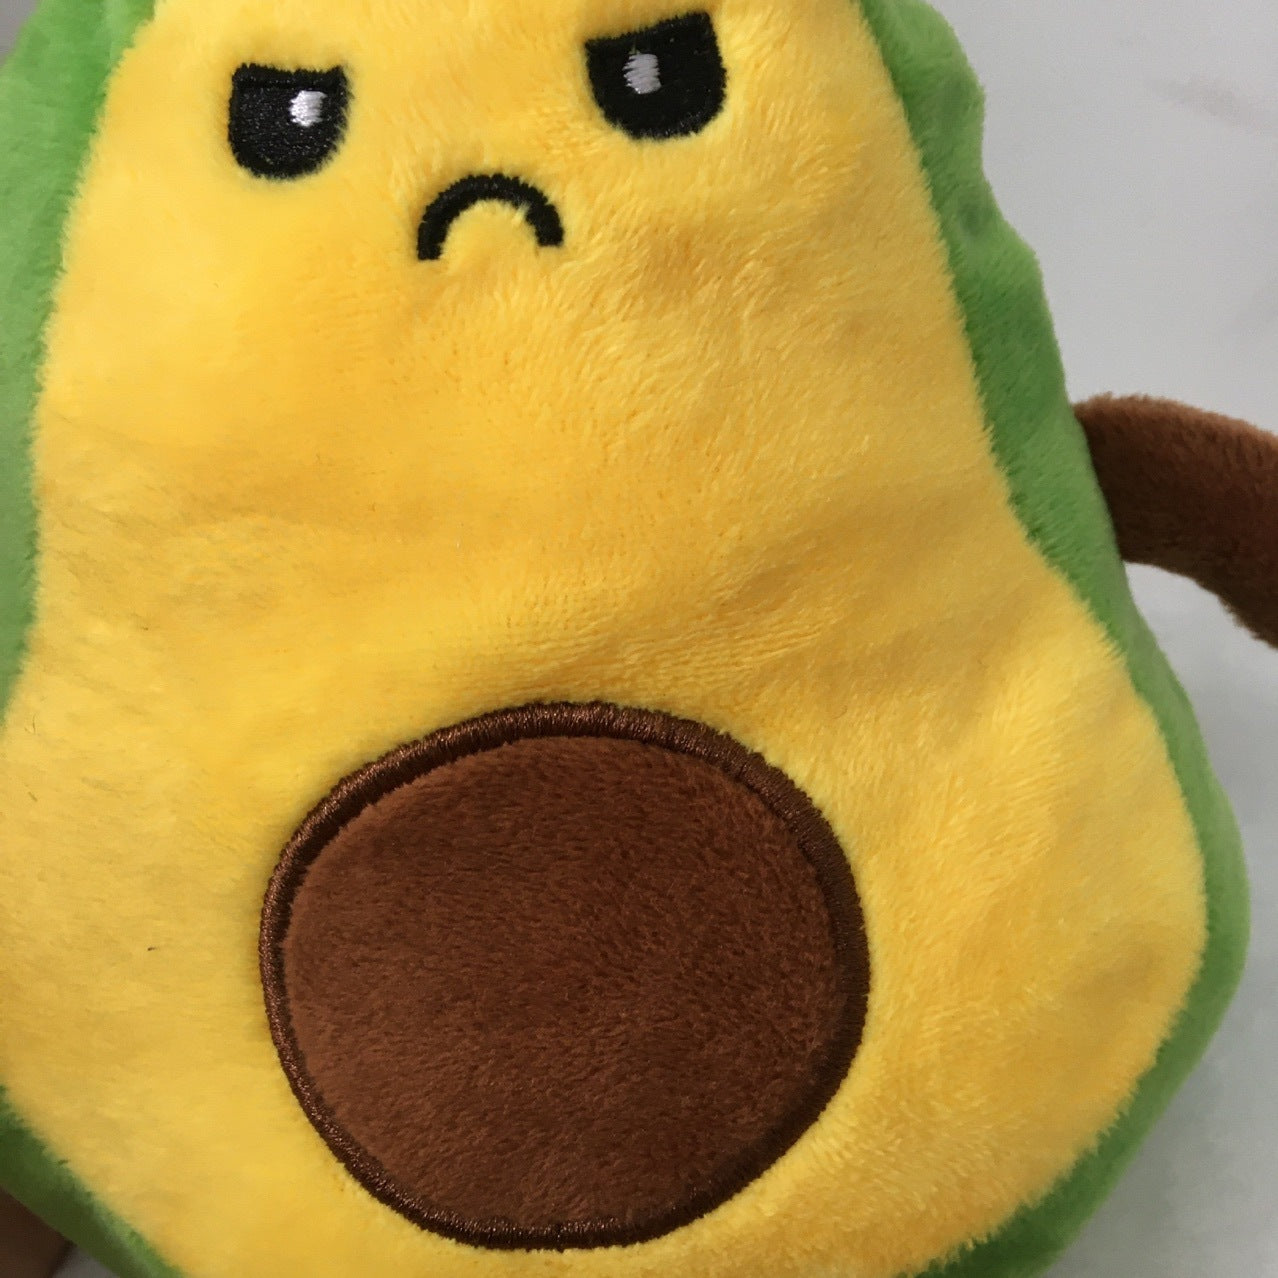 Flip Avocado Doll flip Double-sided Angry Happy Expression Avocado Plush Toy